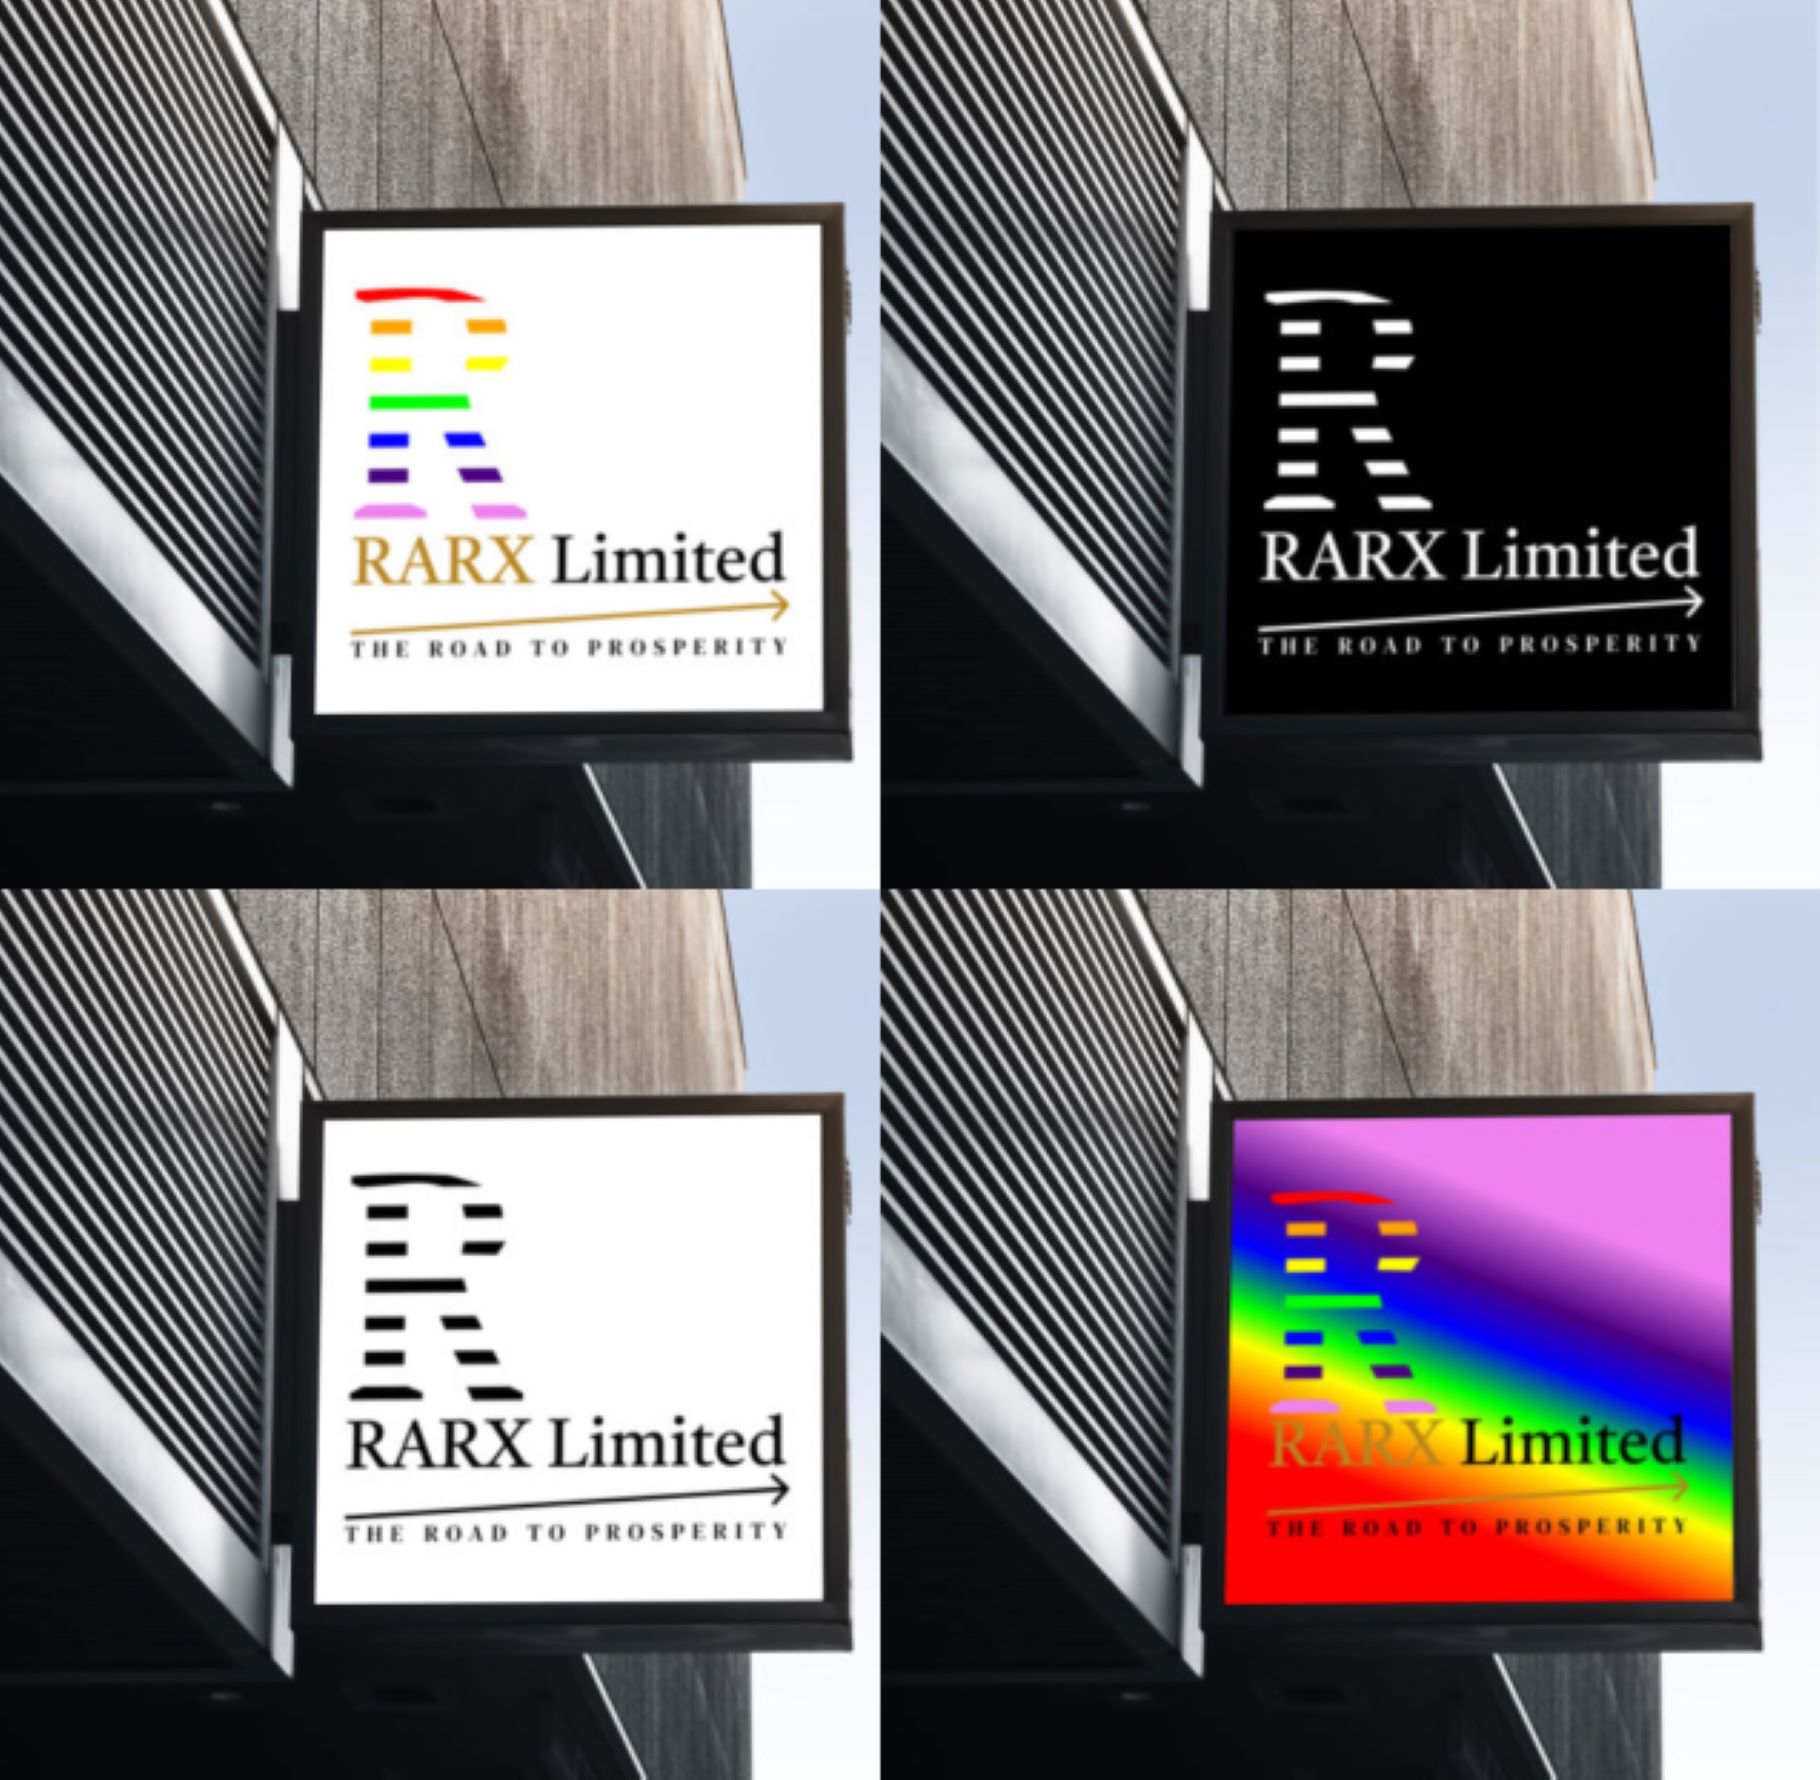 RARX Limited- The road to prosperity